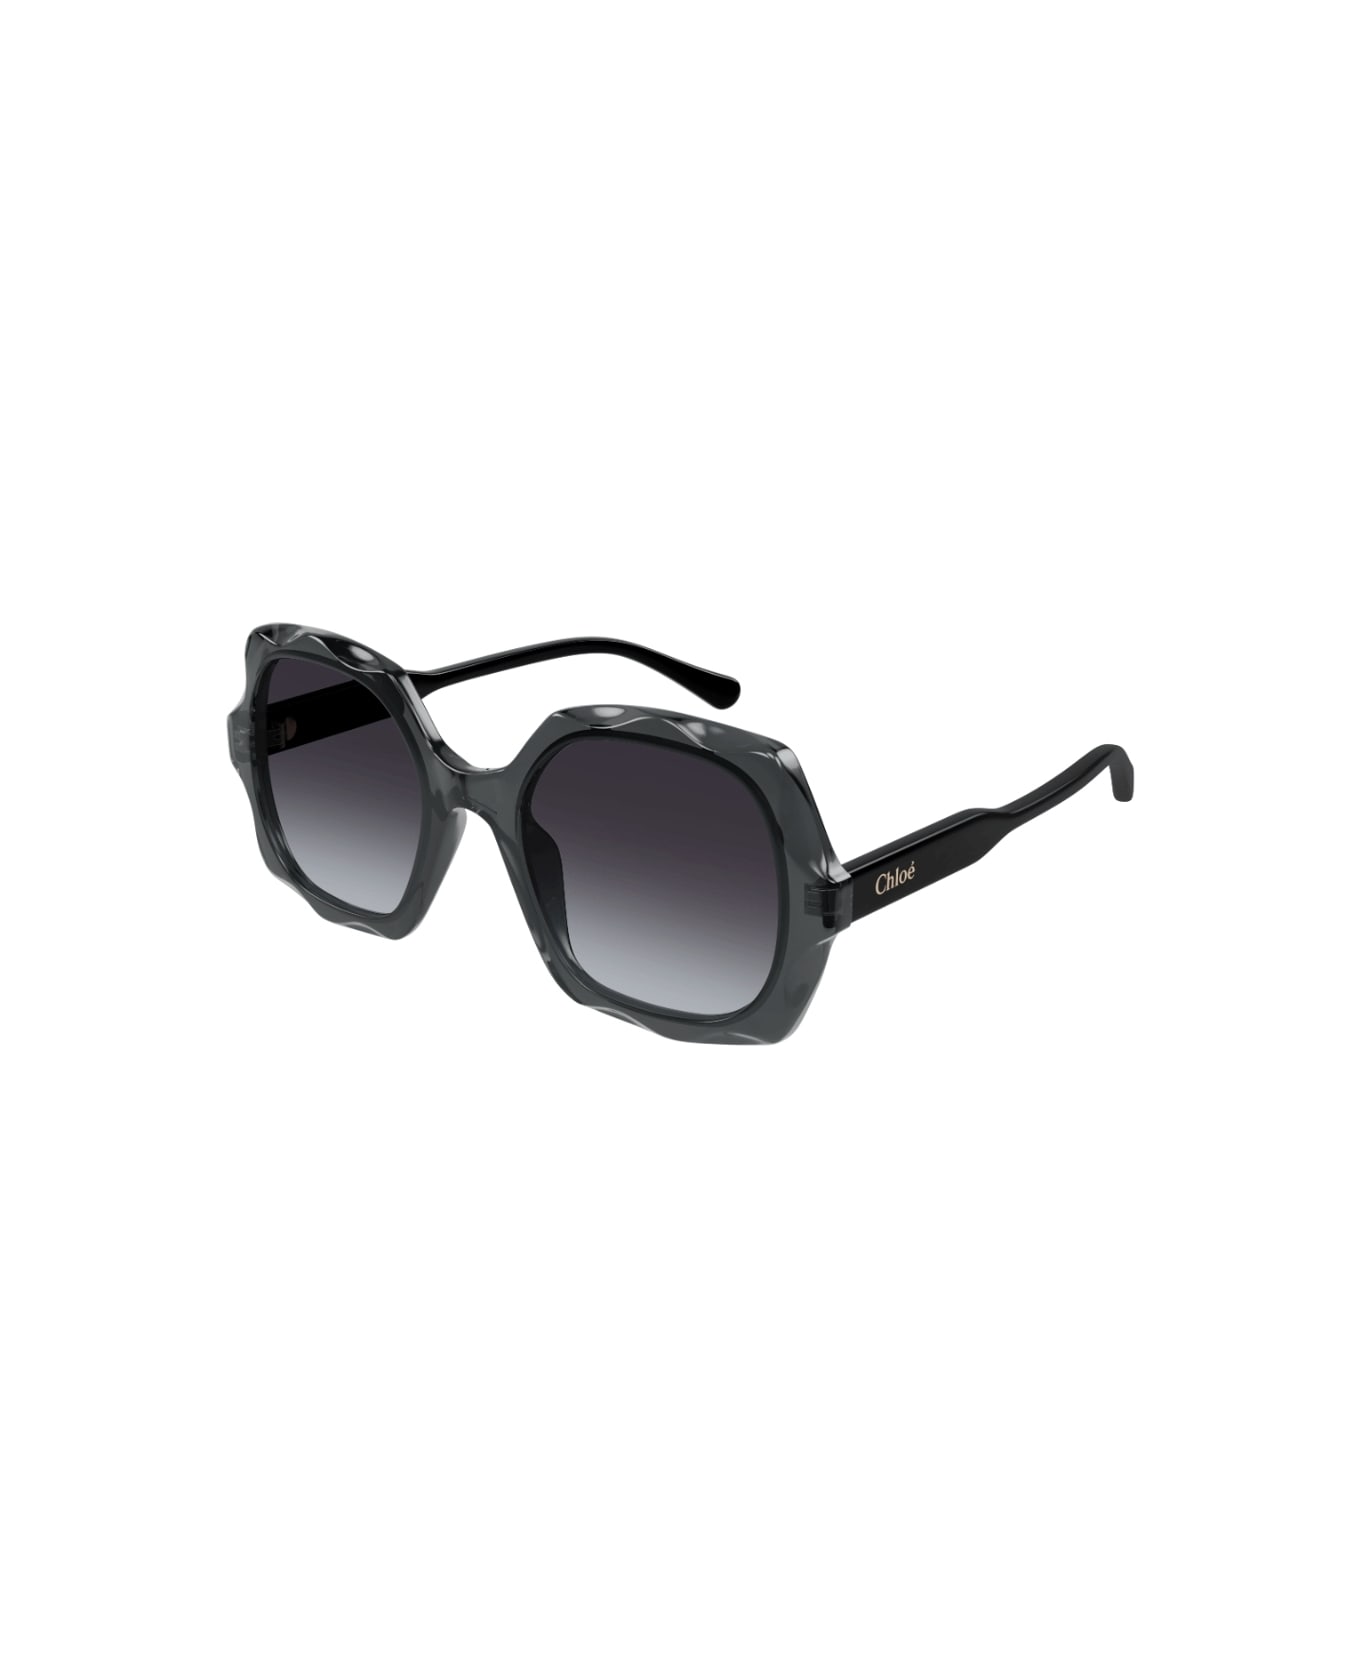 Chloé Eyewear CH02226s 001 Sunglasses